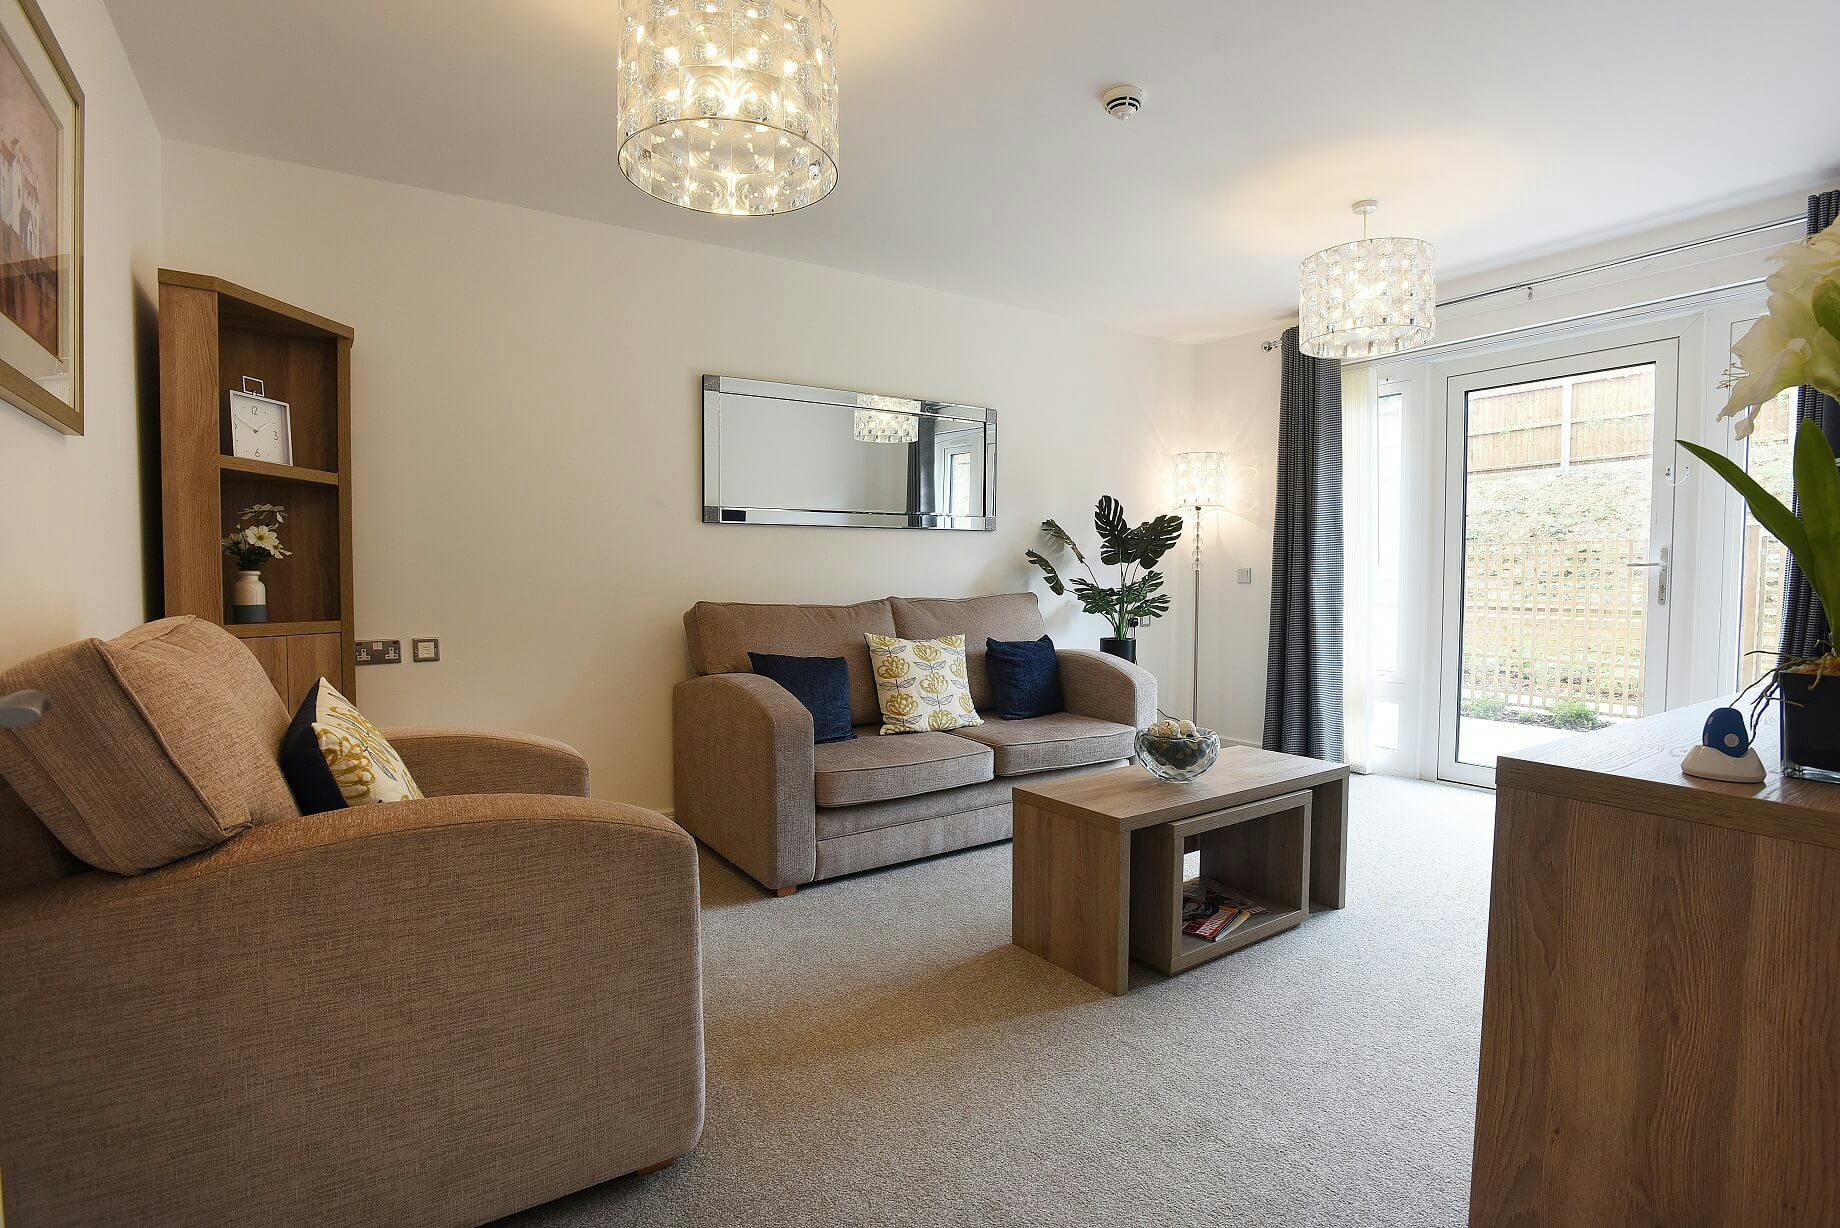 Living Room at Wixams Village Retirement Development in Bedford, Bedfordshire